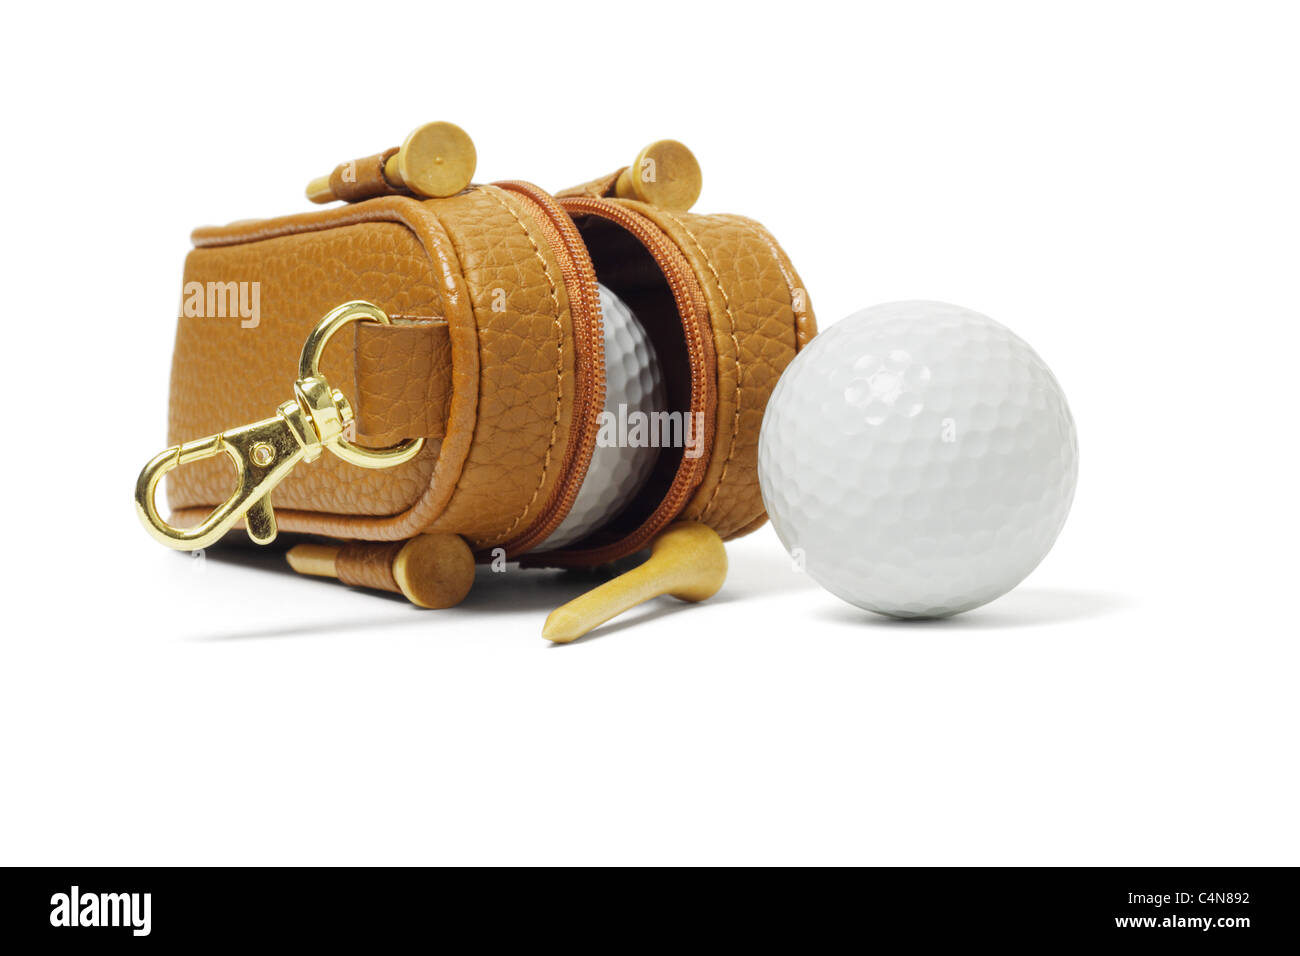 Mini bolsa de golf pelotas y tees sobre fondo blanco. Foto de stock